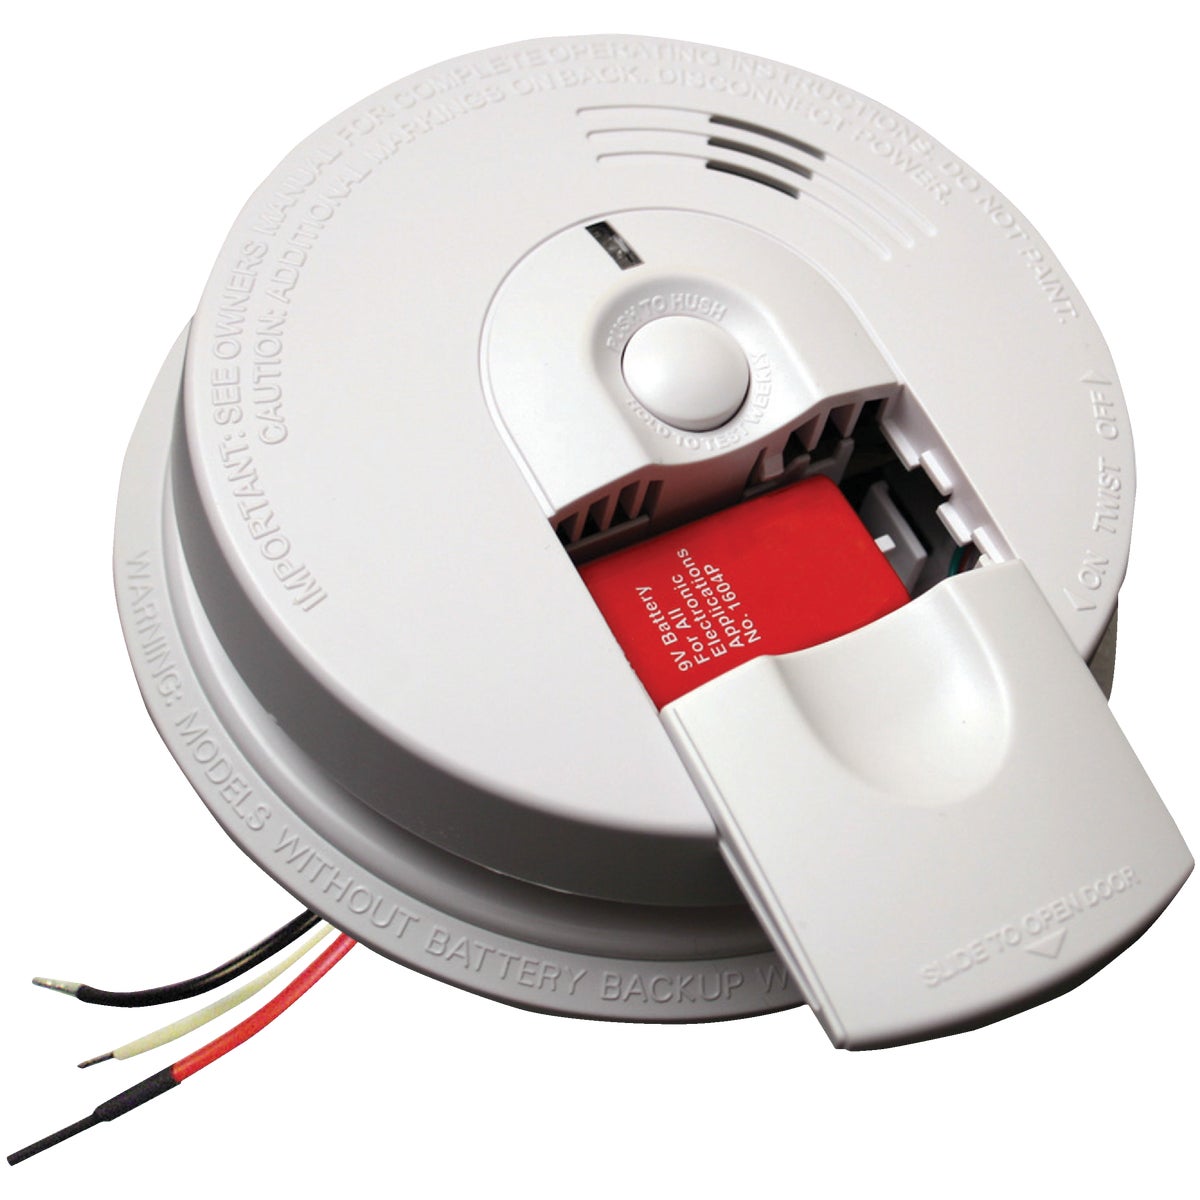 Kidde Firex i4618 Hardwired 120V Ionization Smoke Alarm